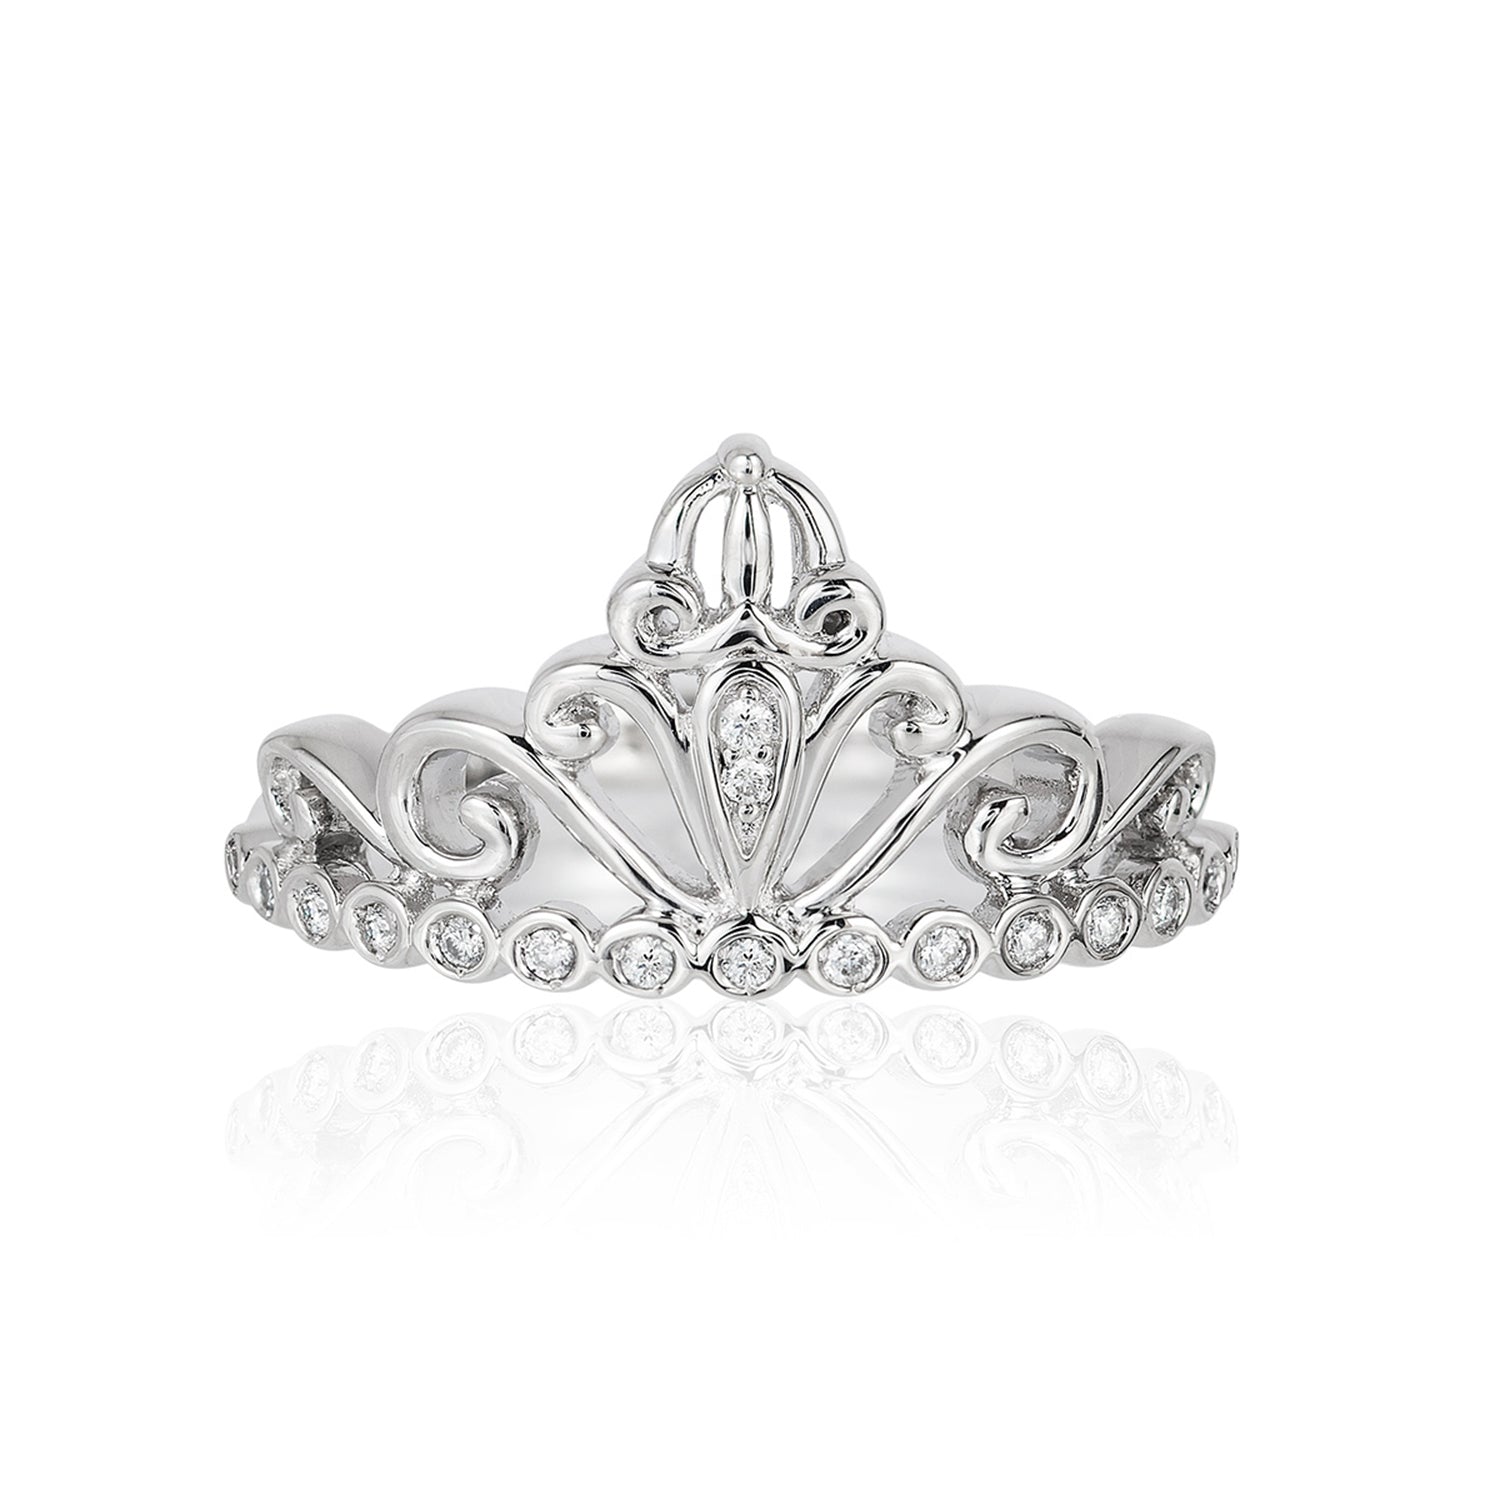 Princess Fairy Tale Round Center Stone Carriage Ring .950 Palladium